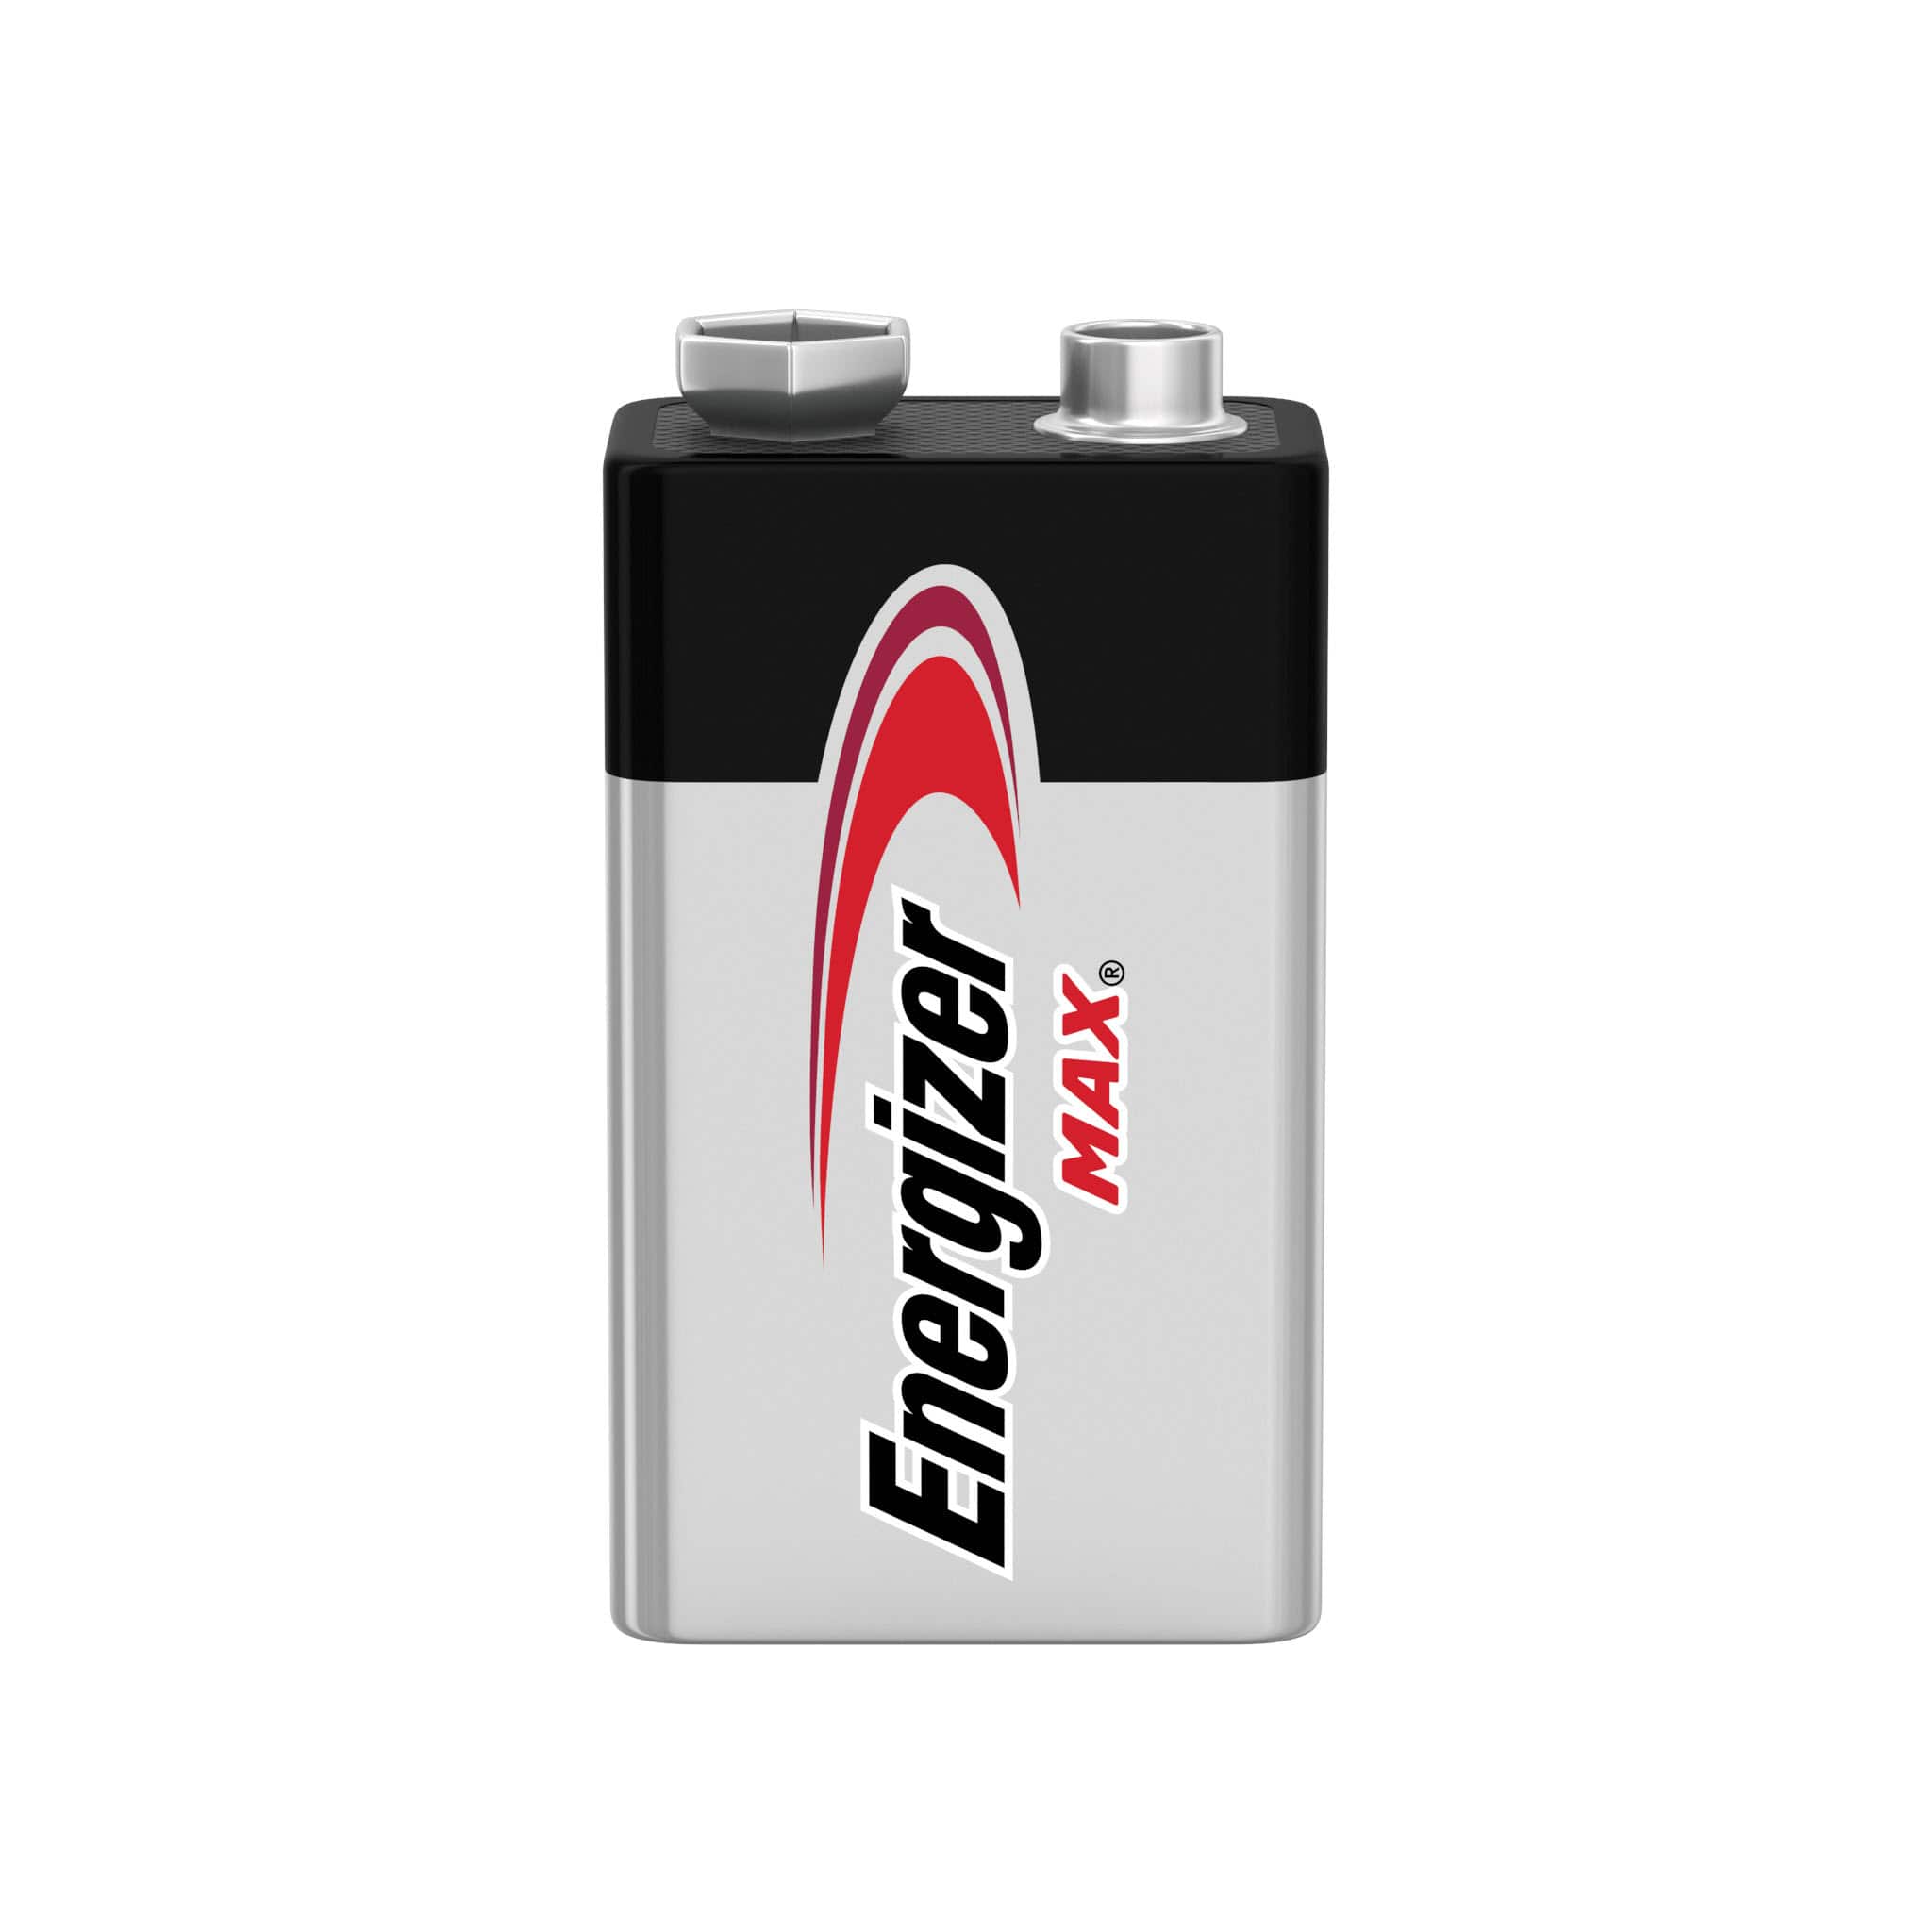 Energizer MAX 9V Batteries - 2 ct. + FREE SHIPPING!